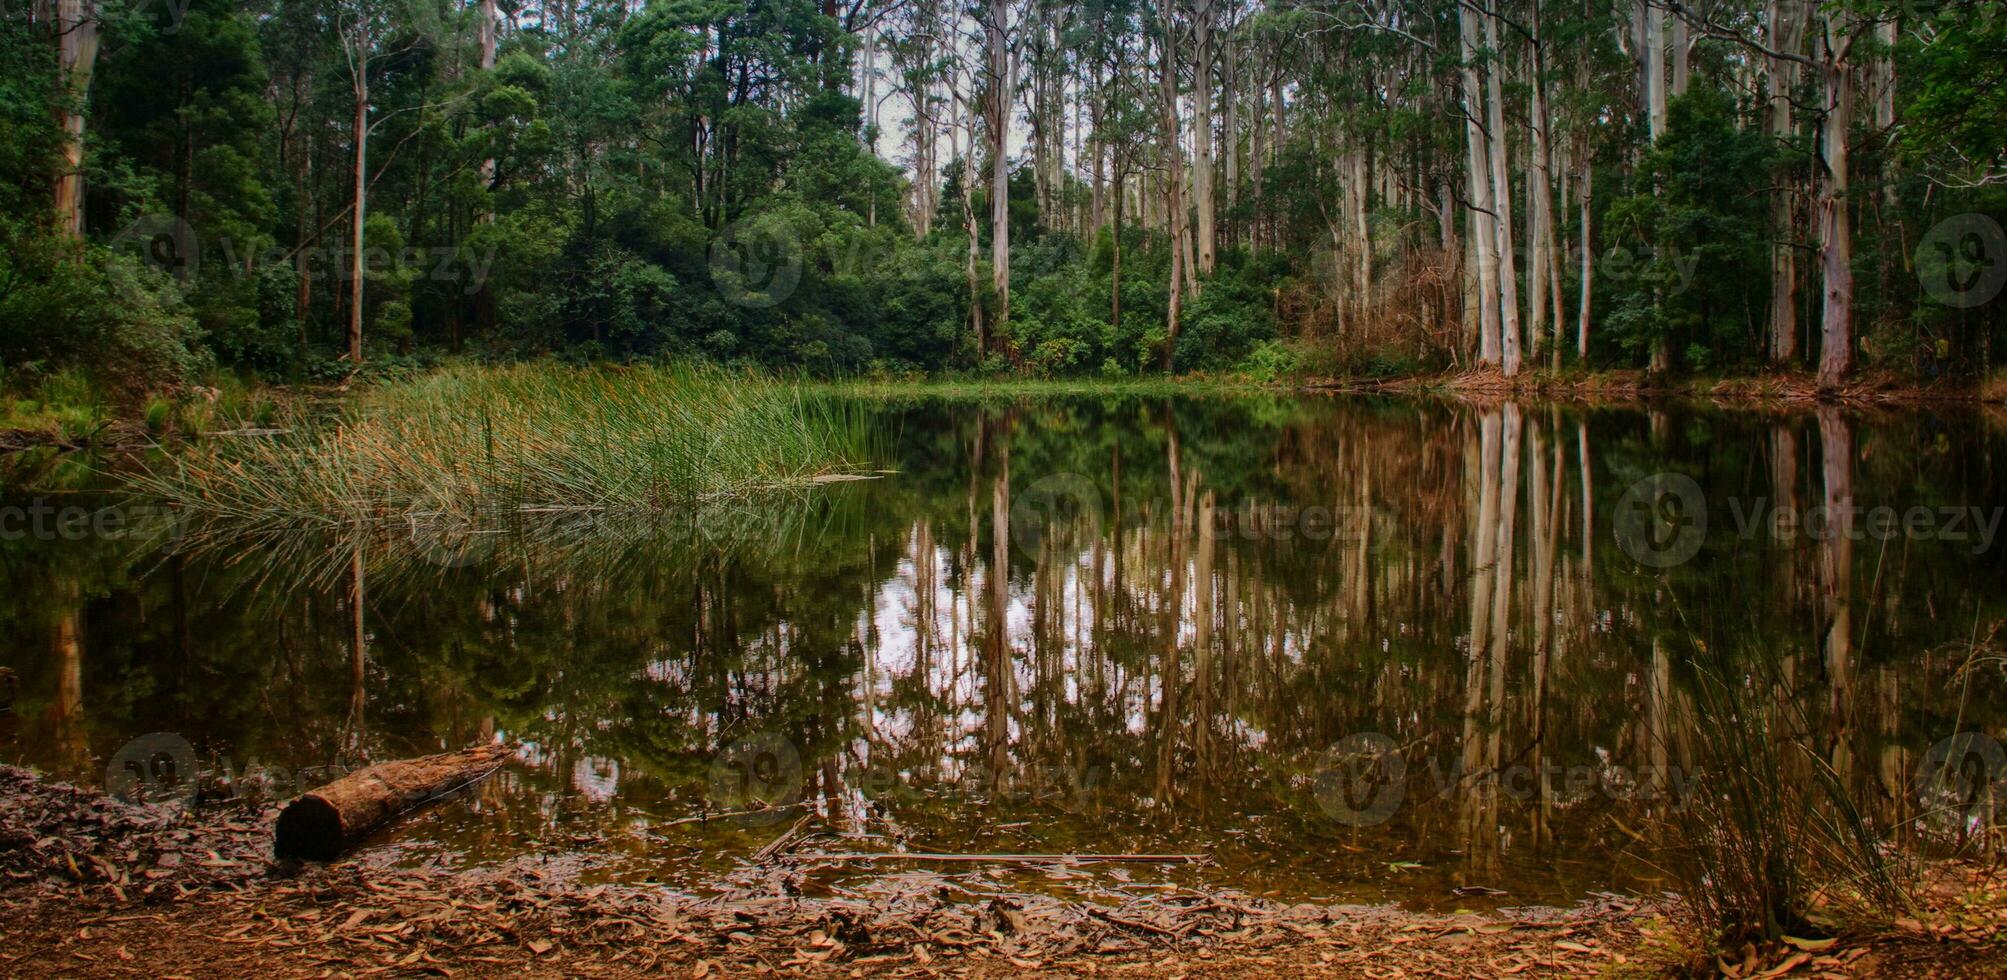 forest pond closeup photo